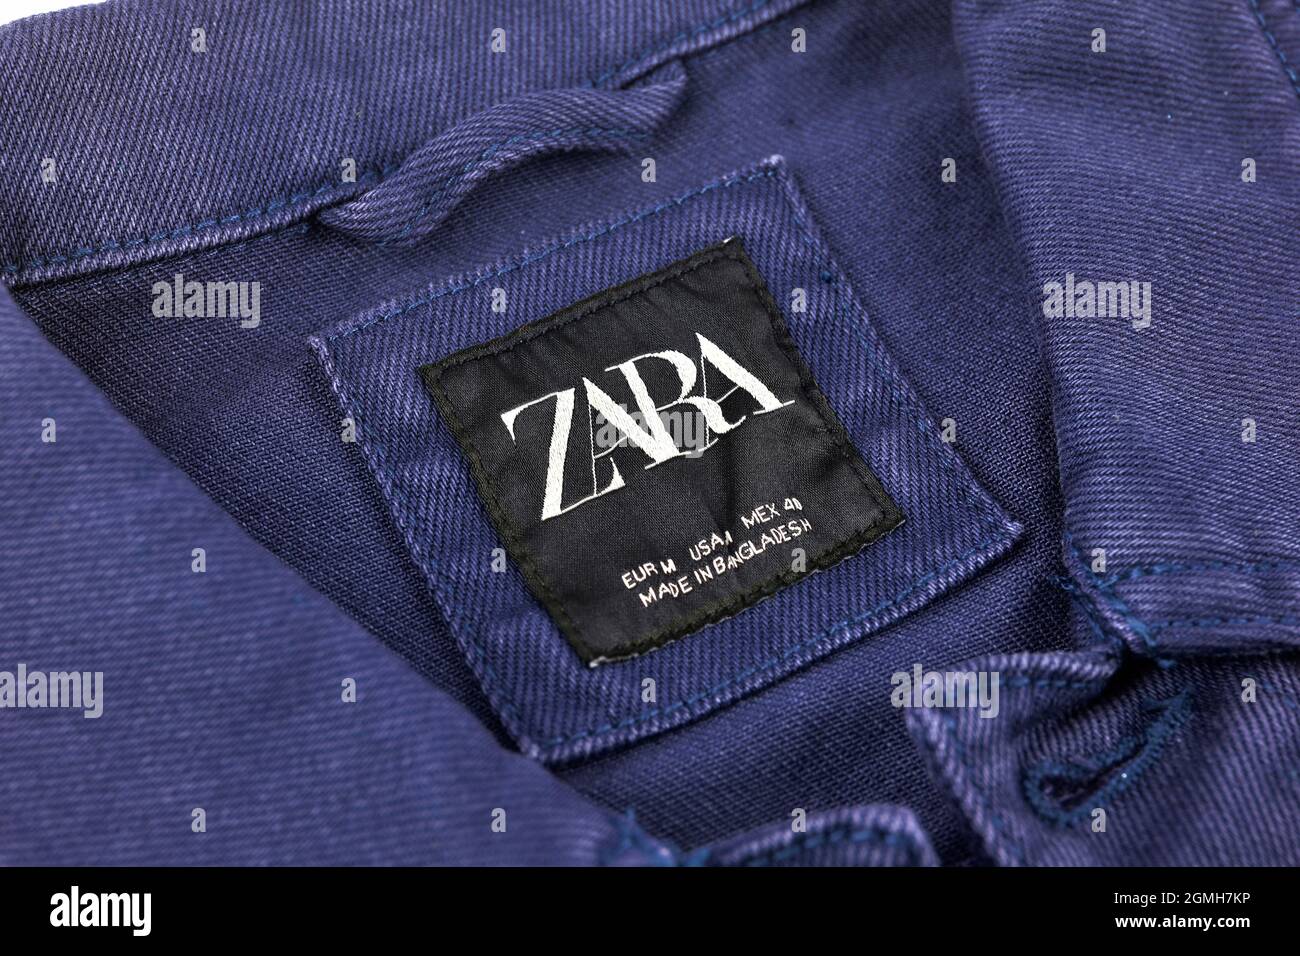 New Delhi, India, 20 December 2019:- Close up of Zara clothing brand tag on denim jacket Stock Photo